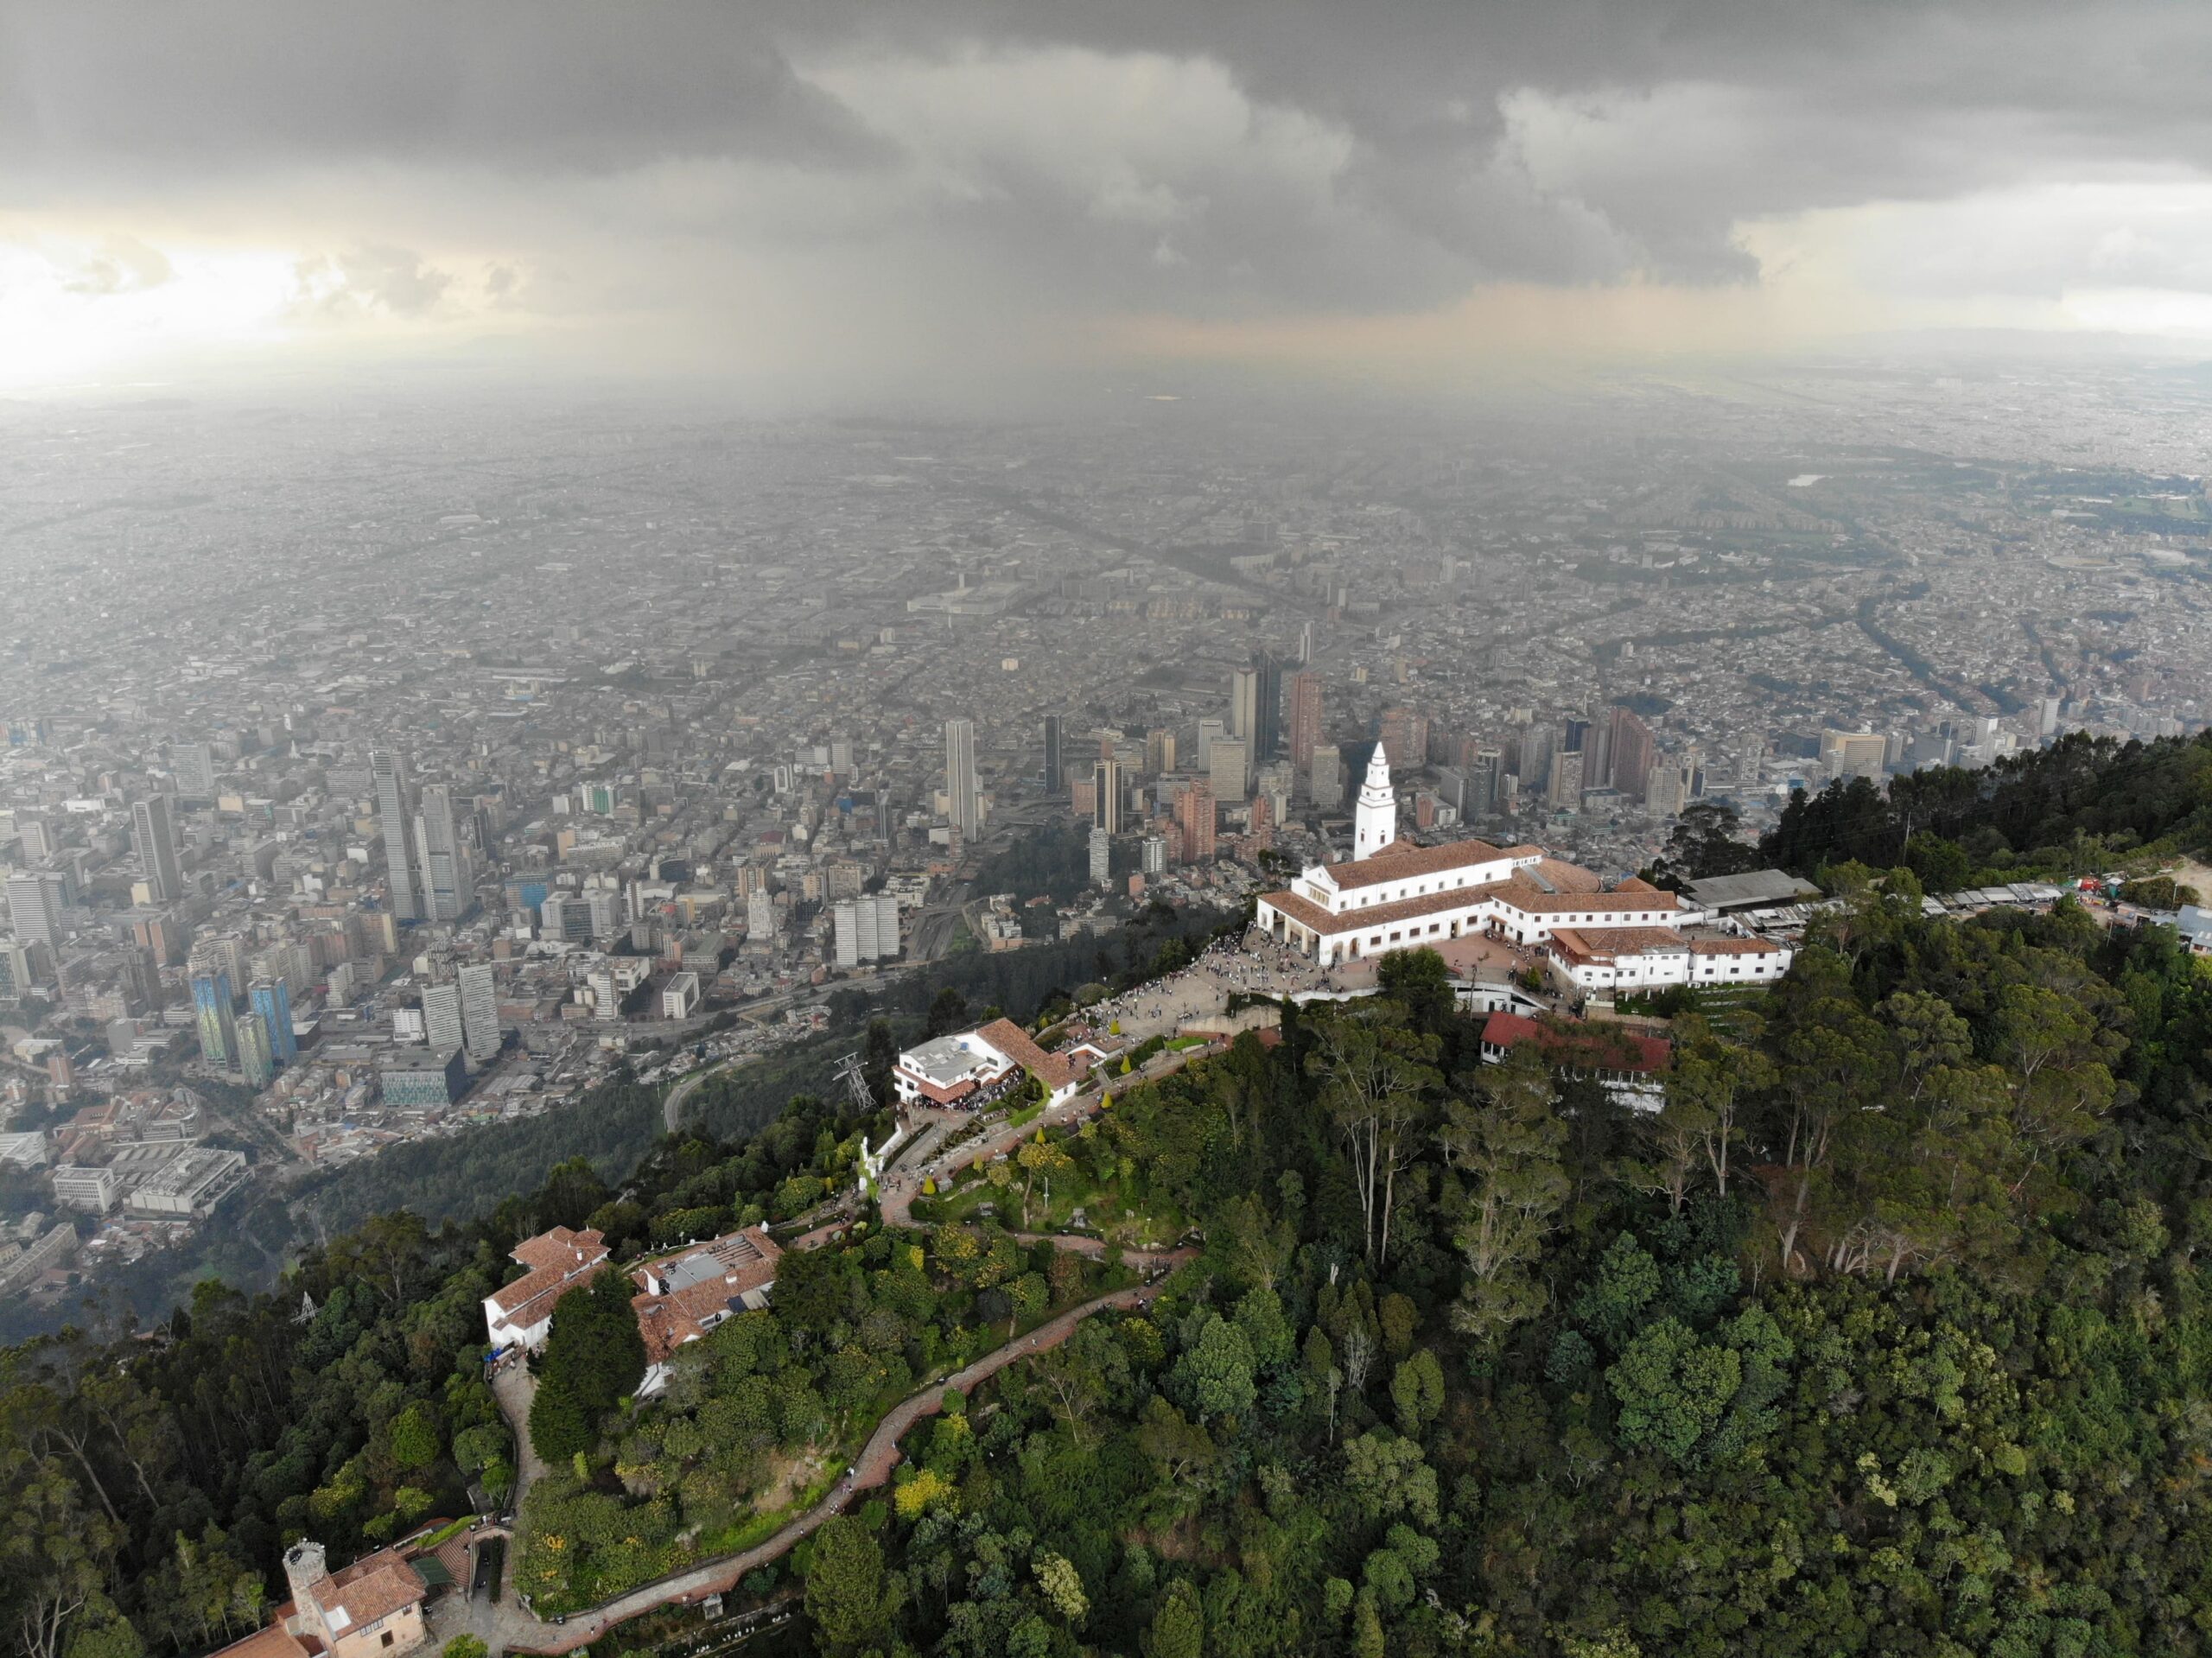 Monserrate hill in Bogota